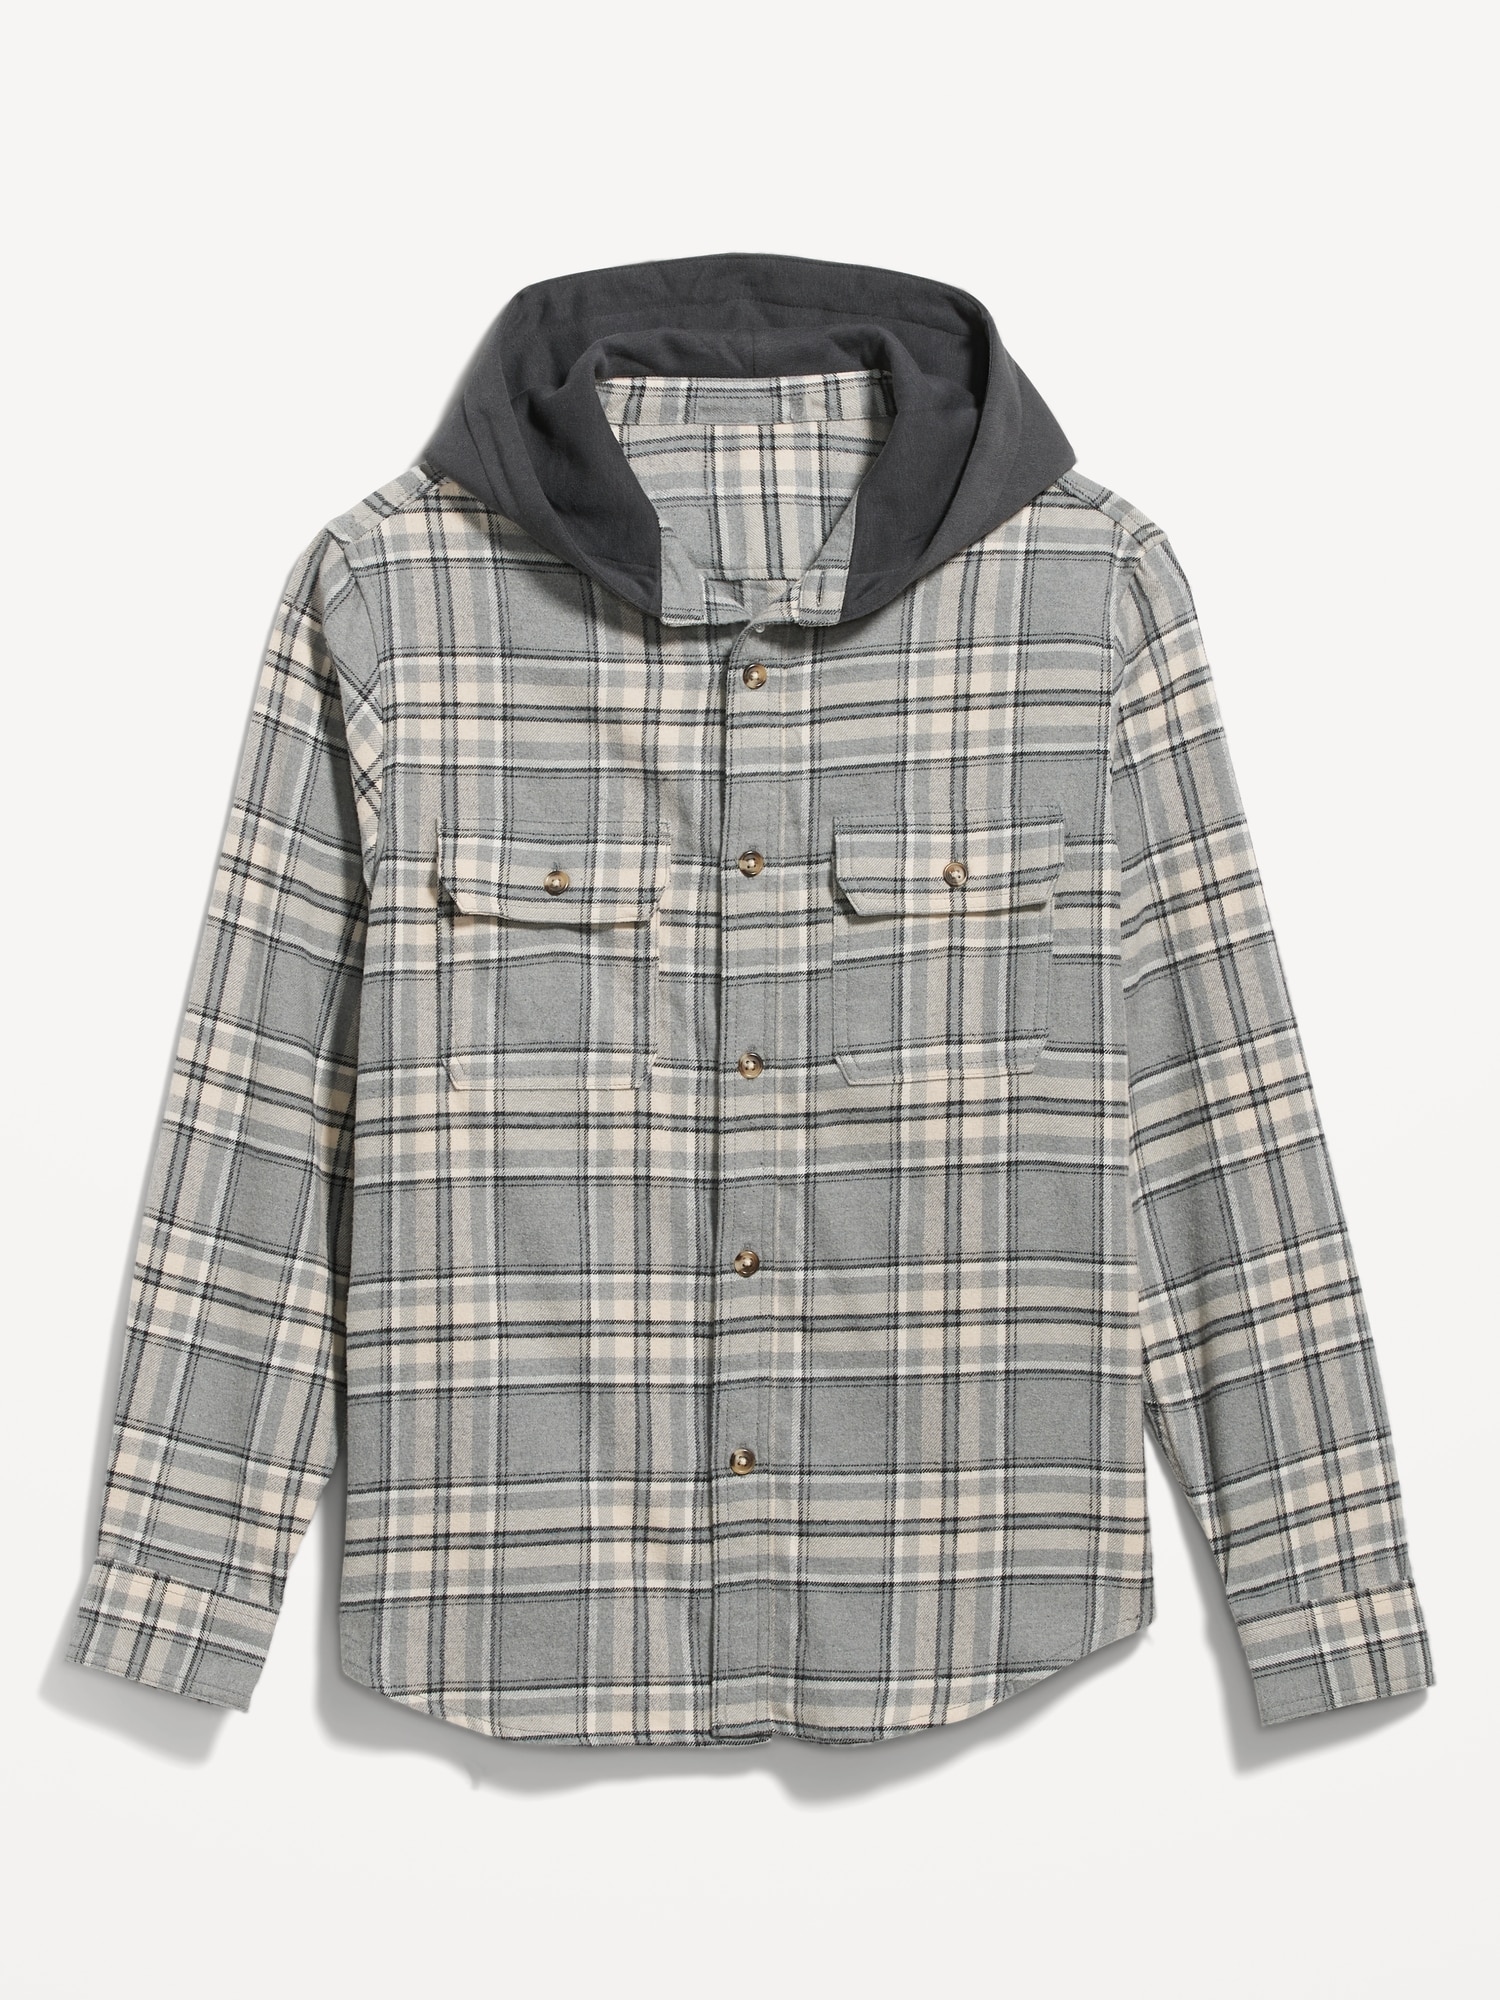 Lavnis Men's Plaid Hooded Shirts Casual Long Sleeve Lightweight Shirt  Jackets